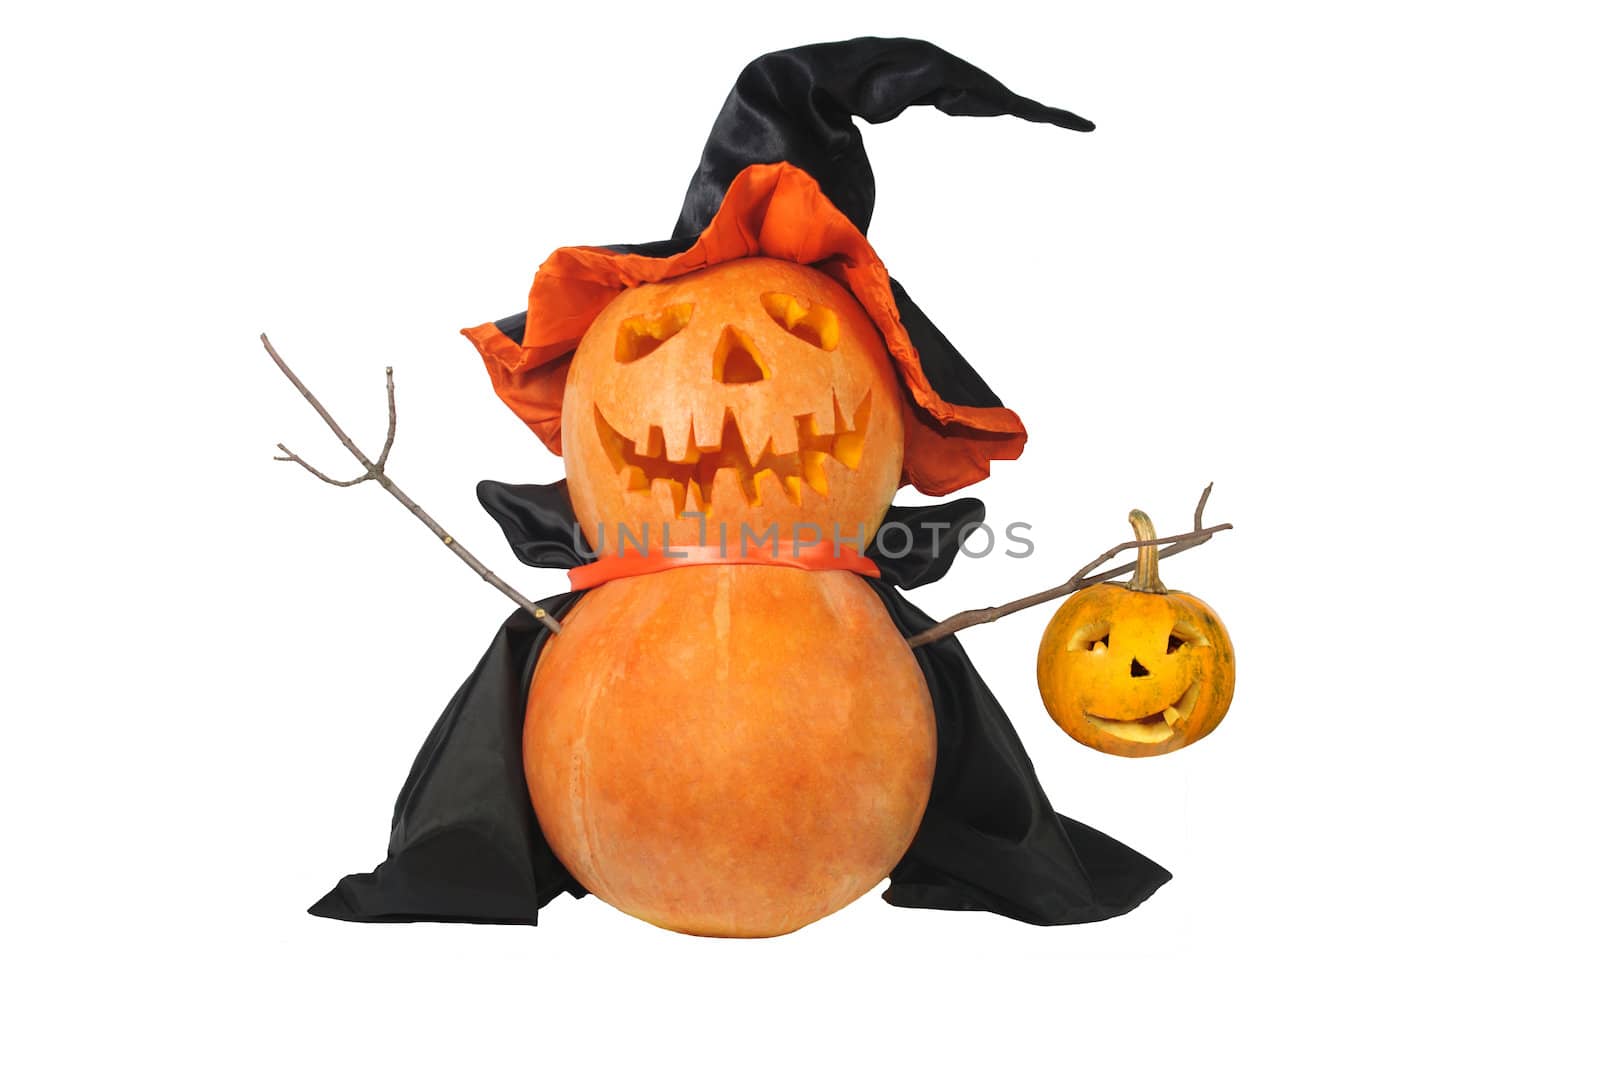 Halloween pumpkin with black hat by Nickolya